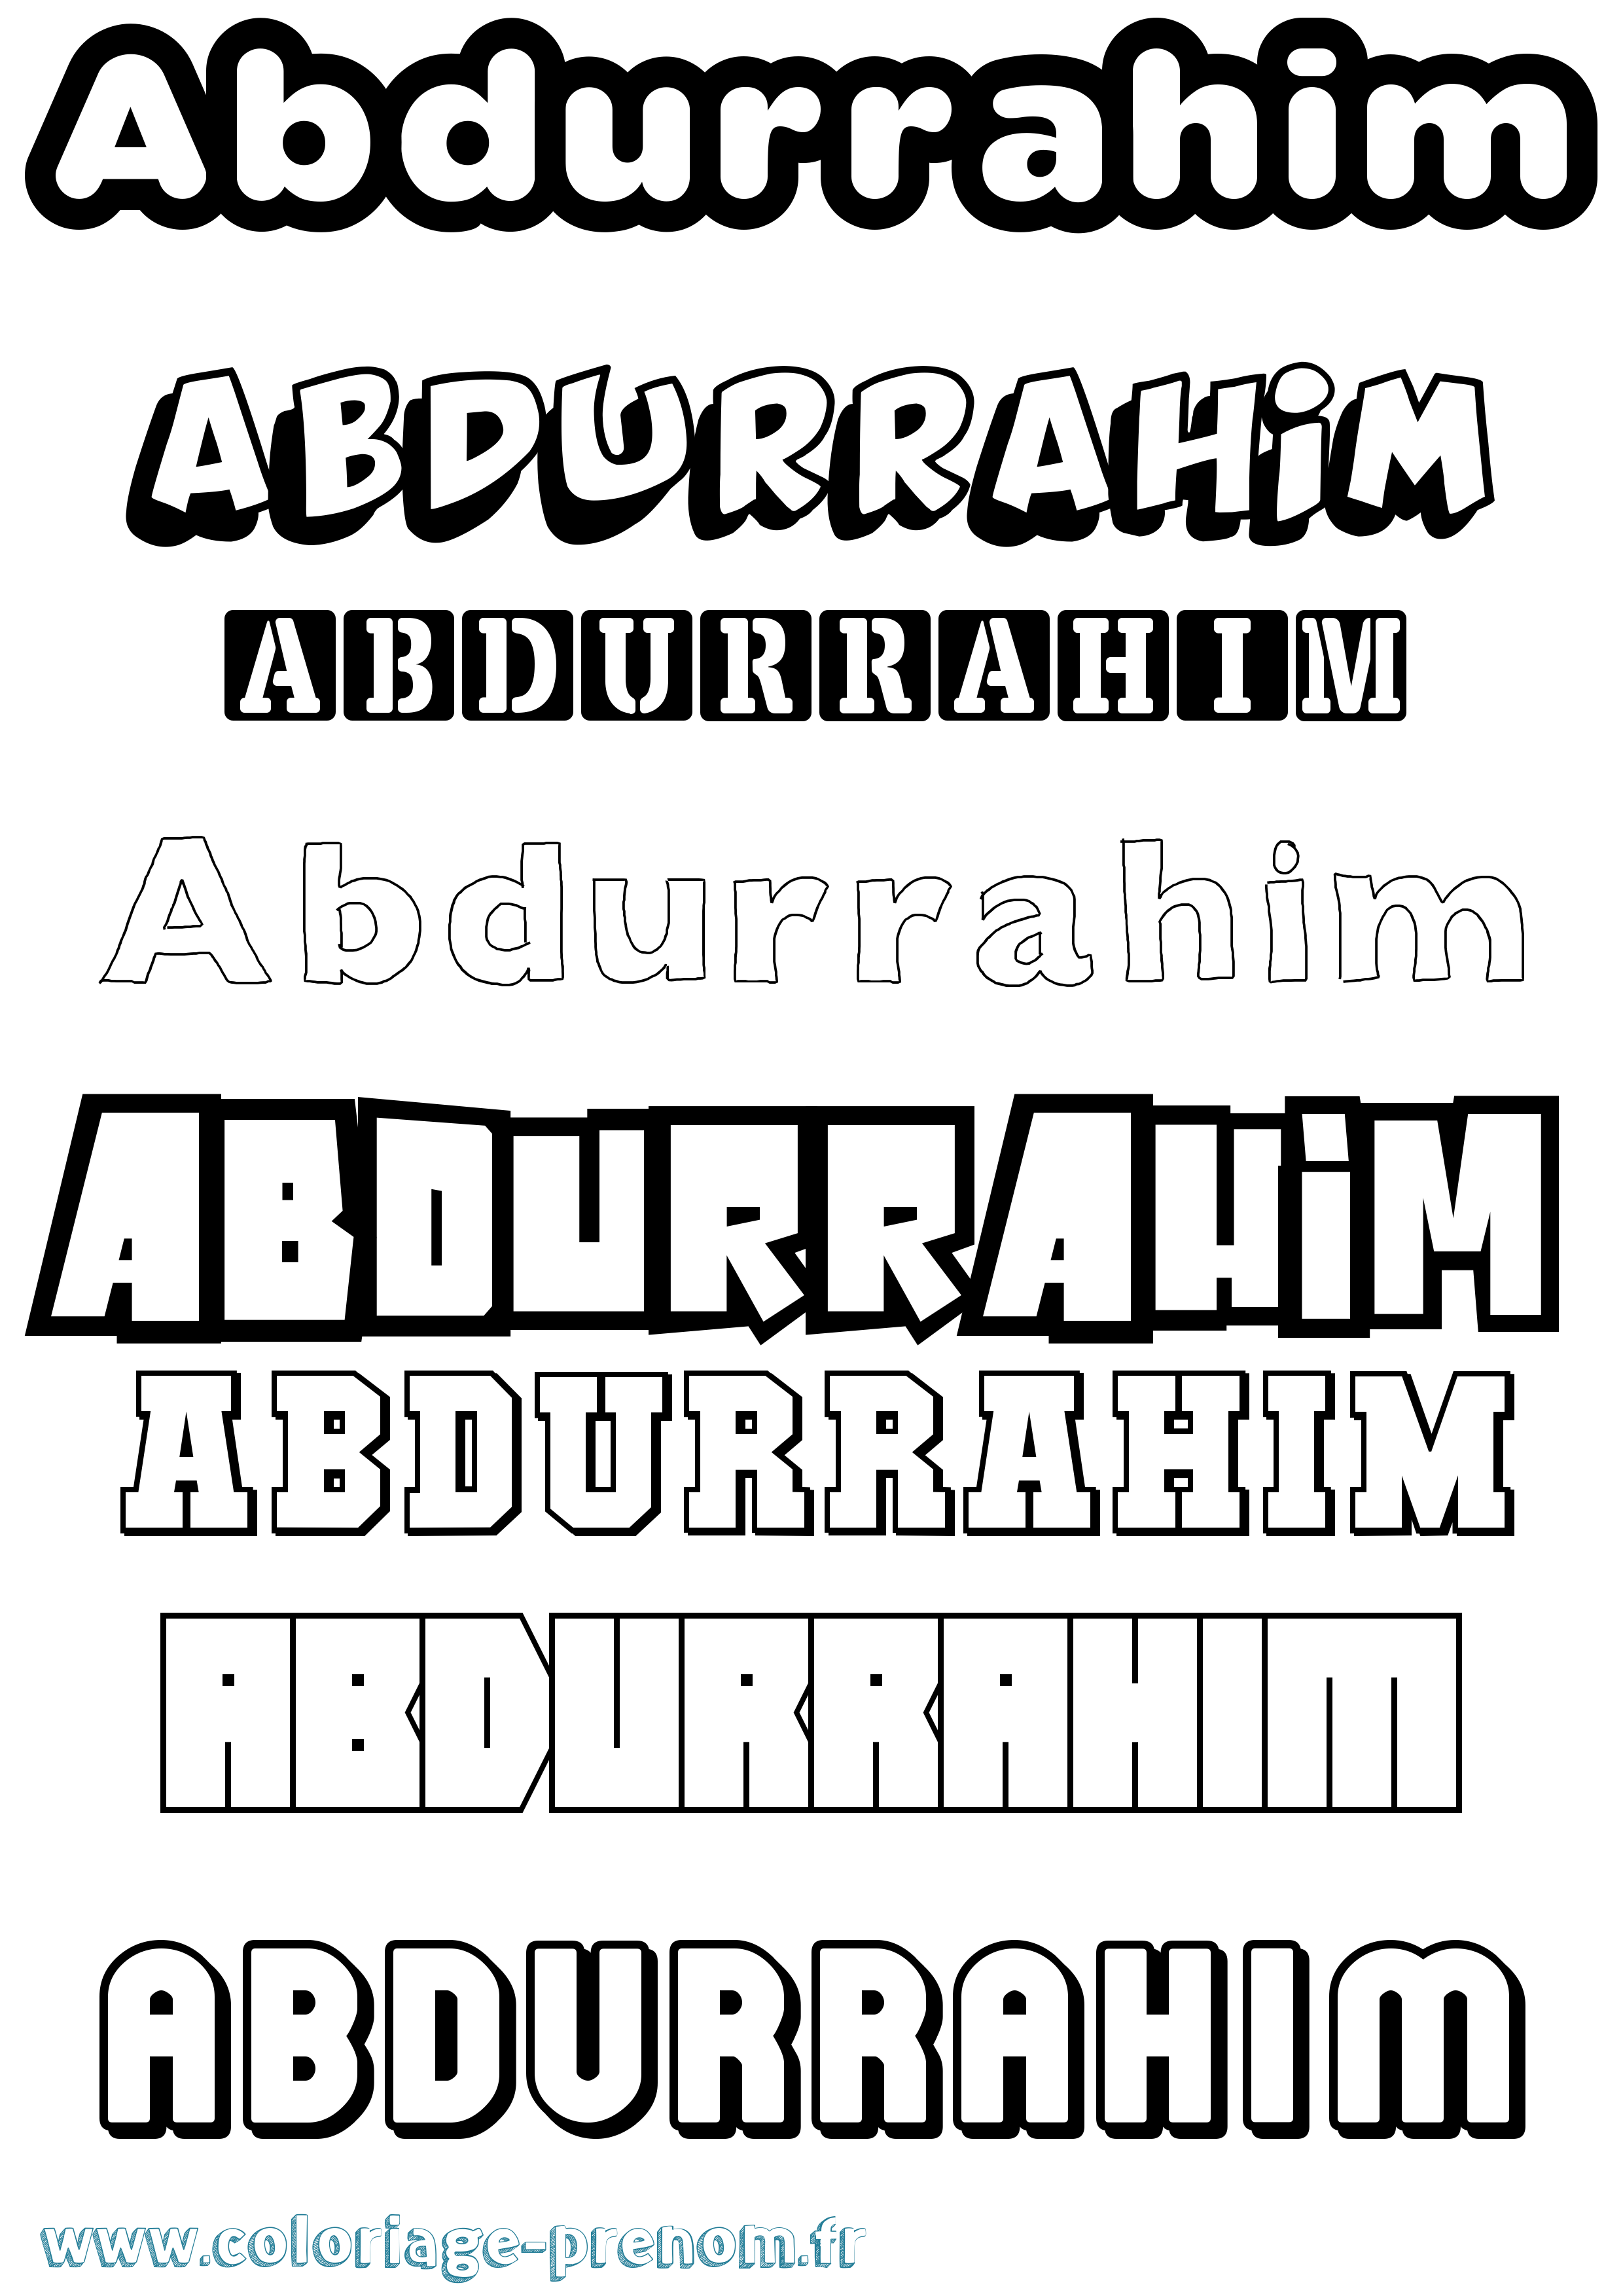 Coloriage prénom Abdurrahim Simple